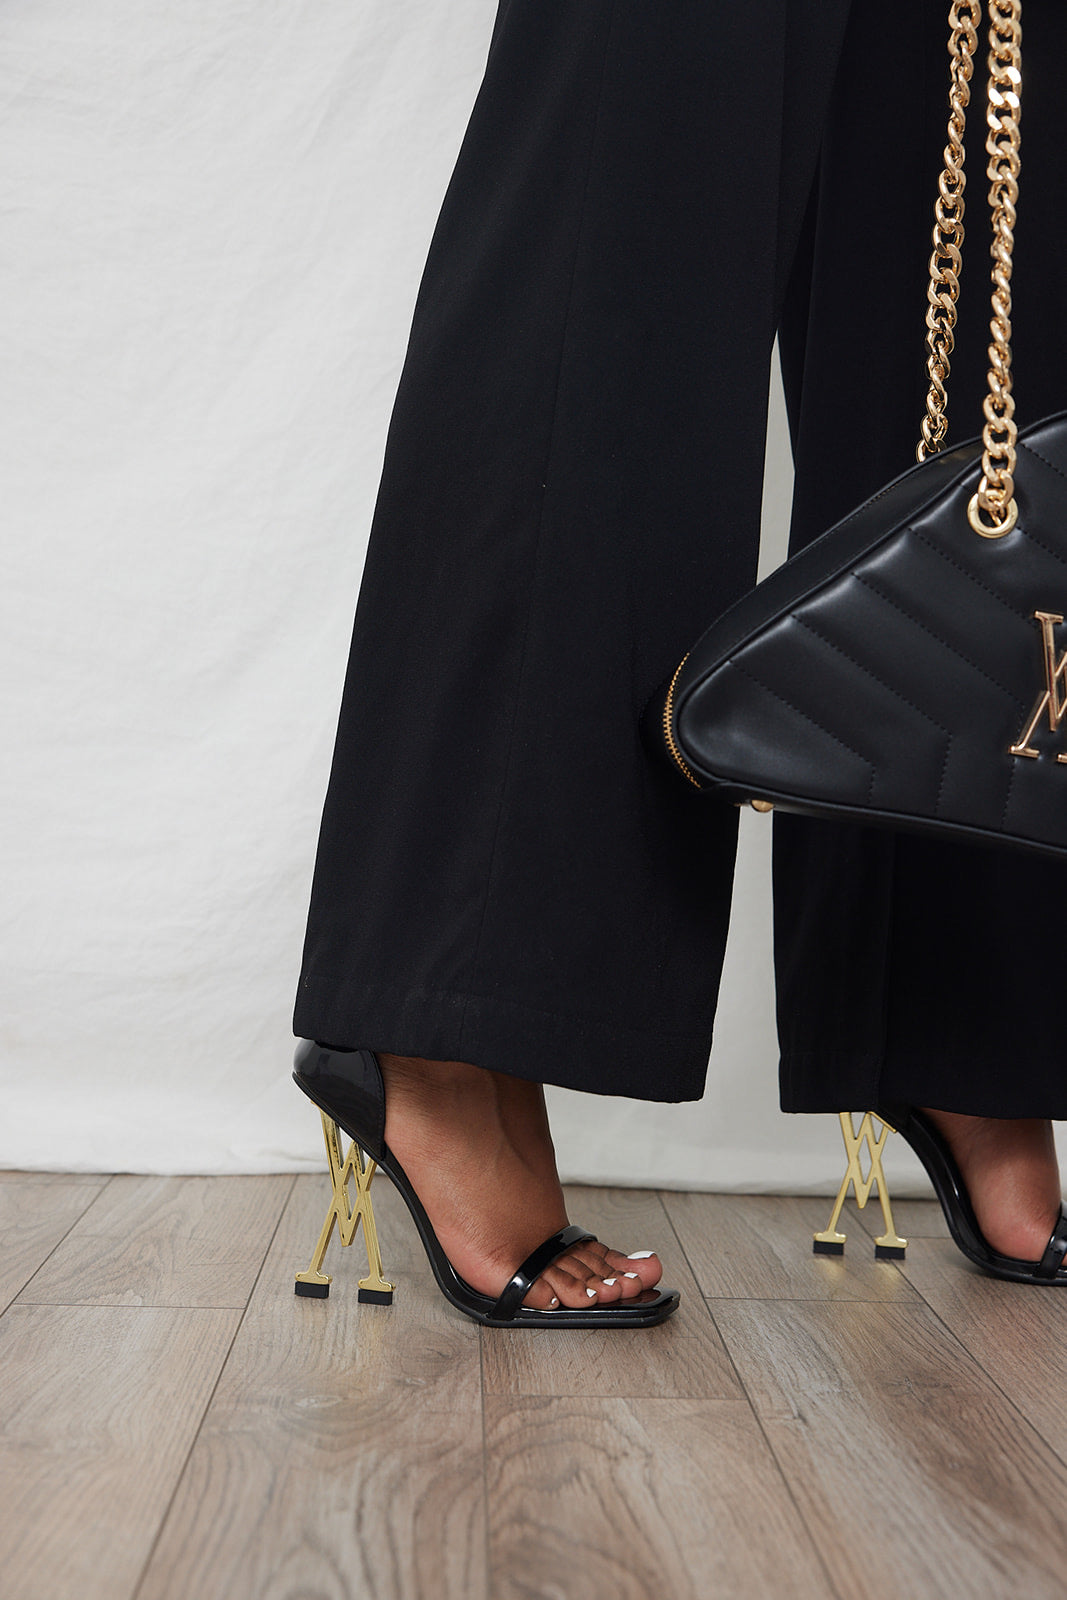 Comfortable black sandal with gold heel